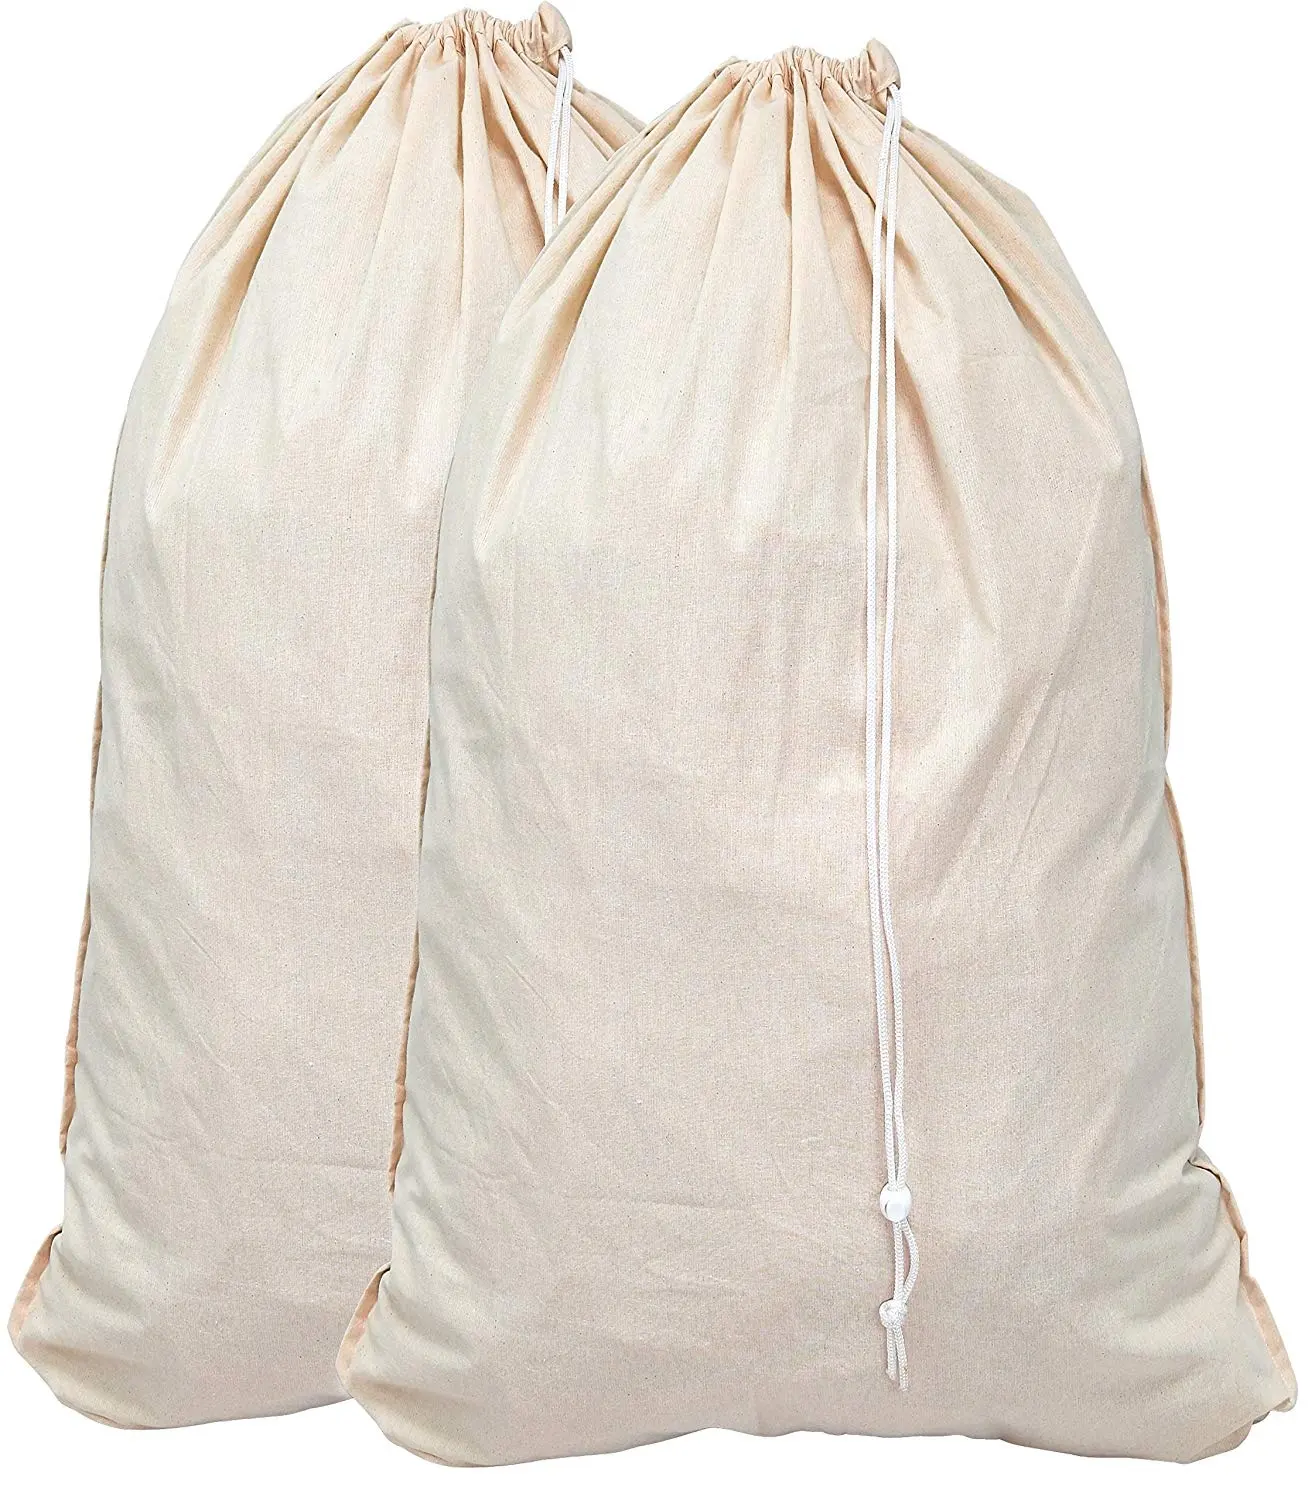 Waterproof Underwear Laundry Bag With Rope